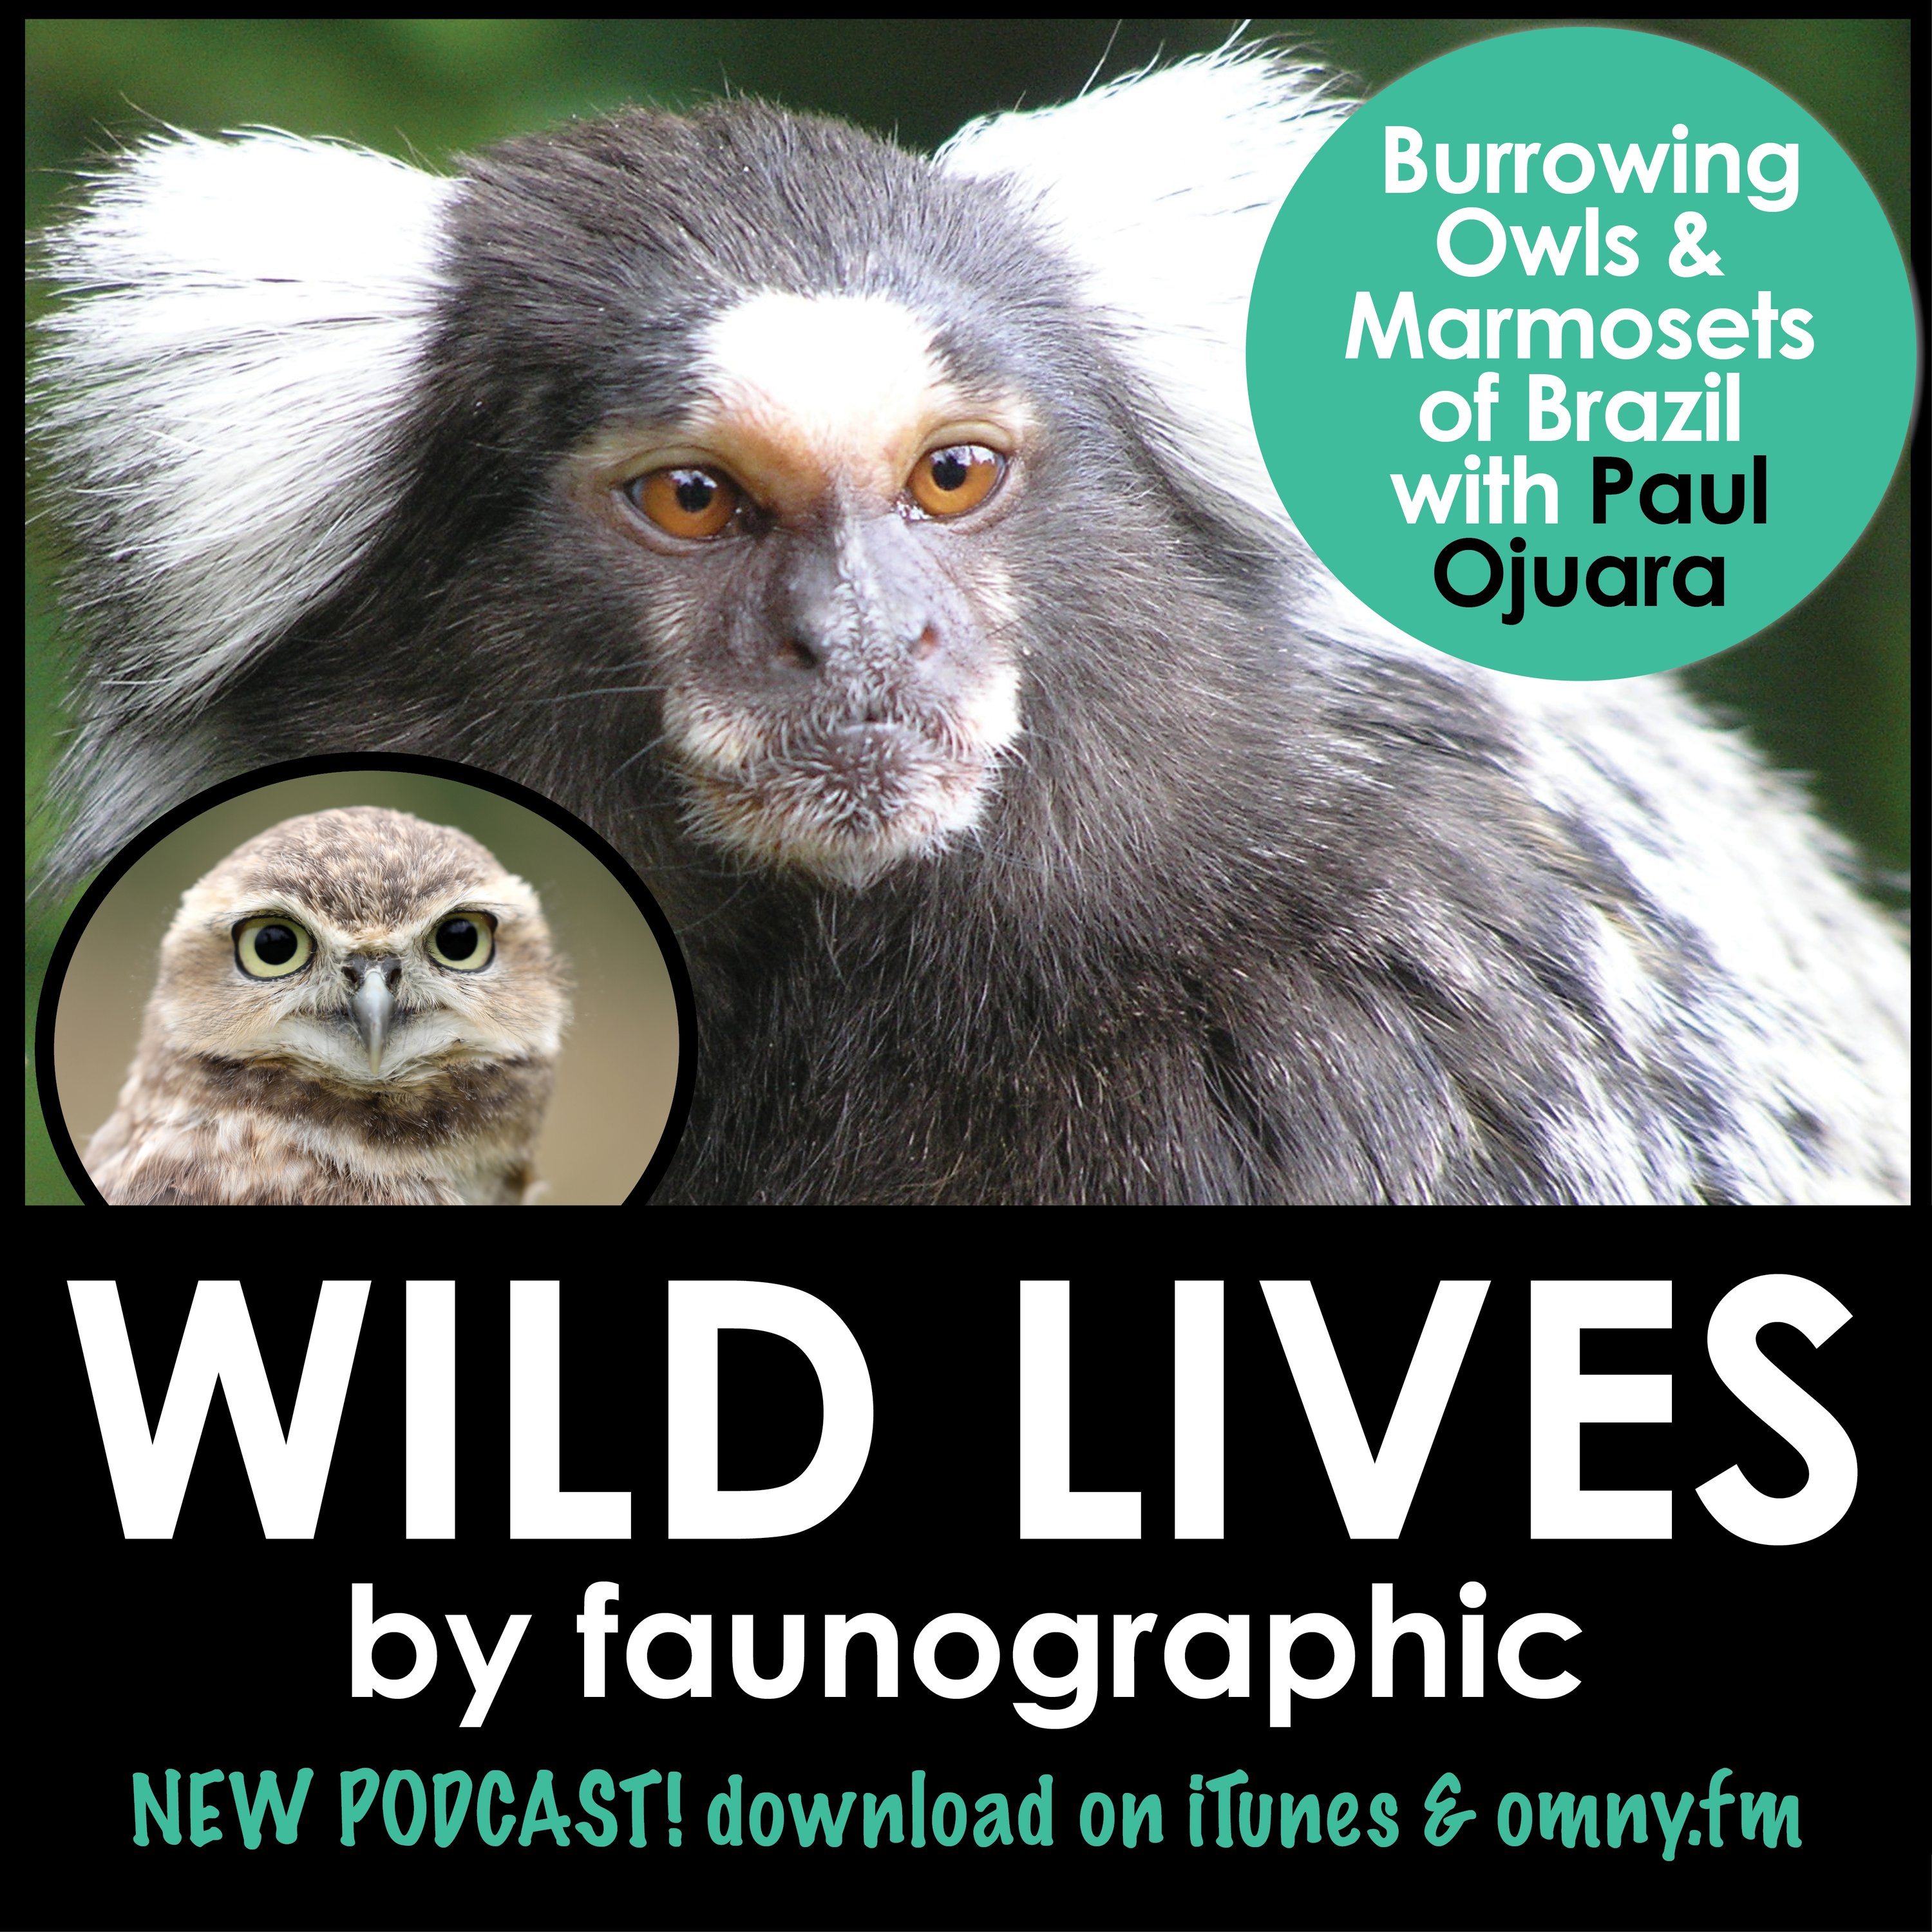 Paul Ojuara on Brazil’s Marmosets & Burrowing Owls